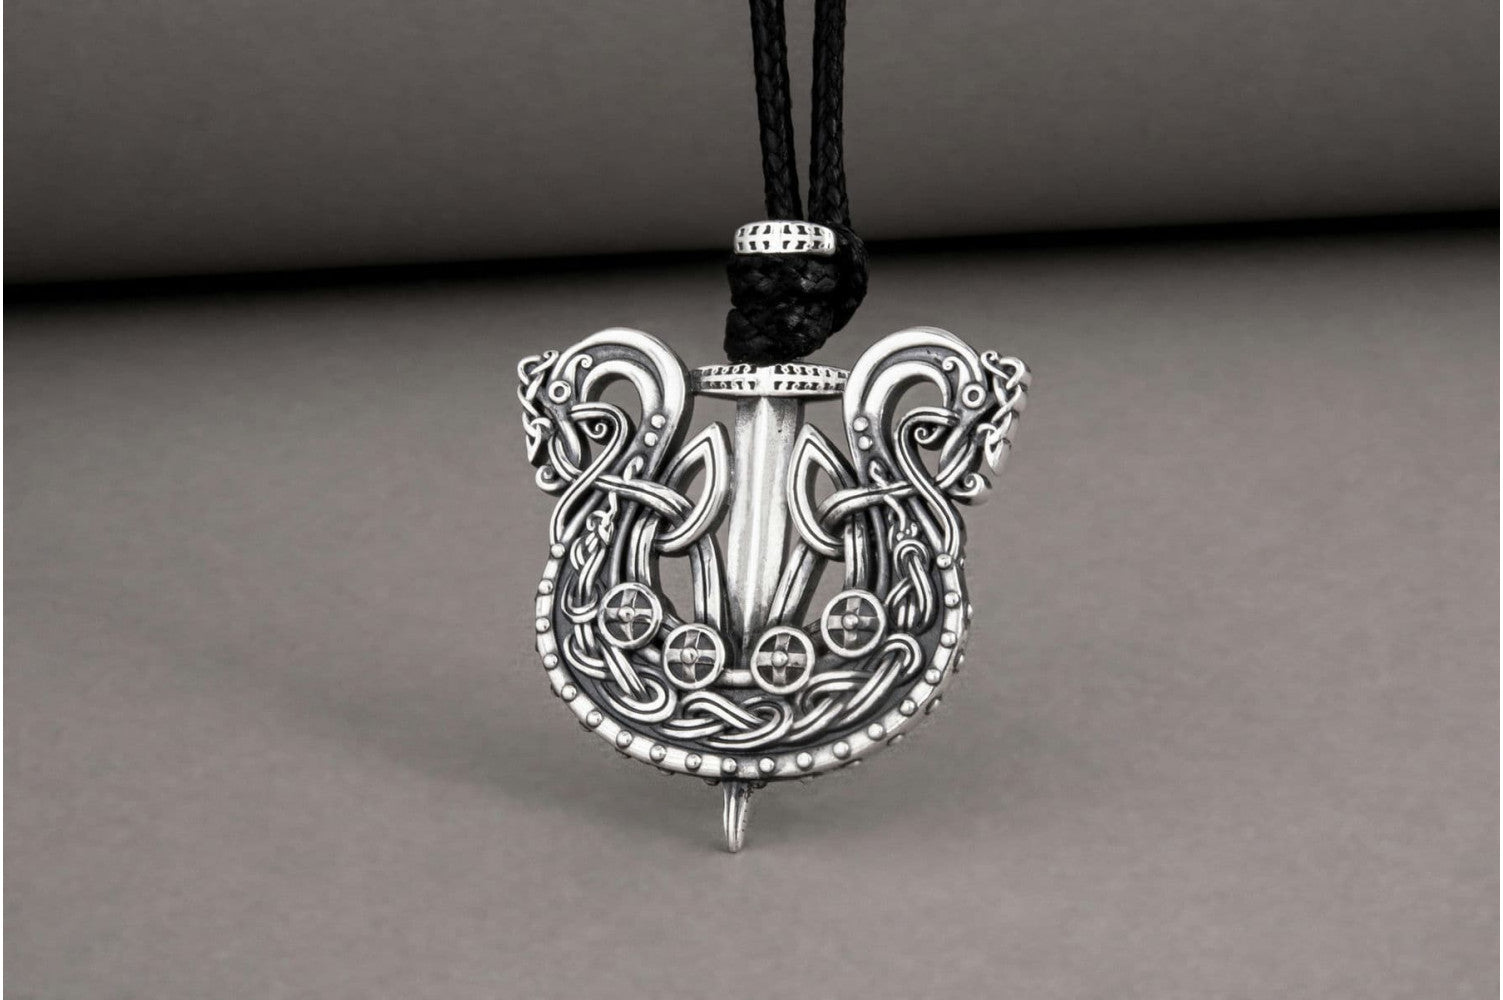 Unique Viking Drakkar with sword pendant, handmade sterling silver jewelry - vikingworkshop